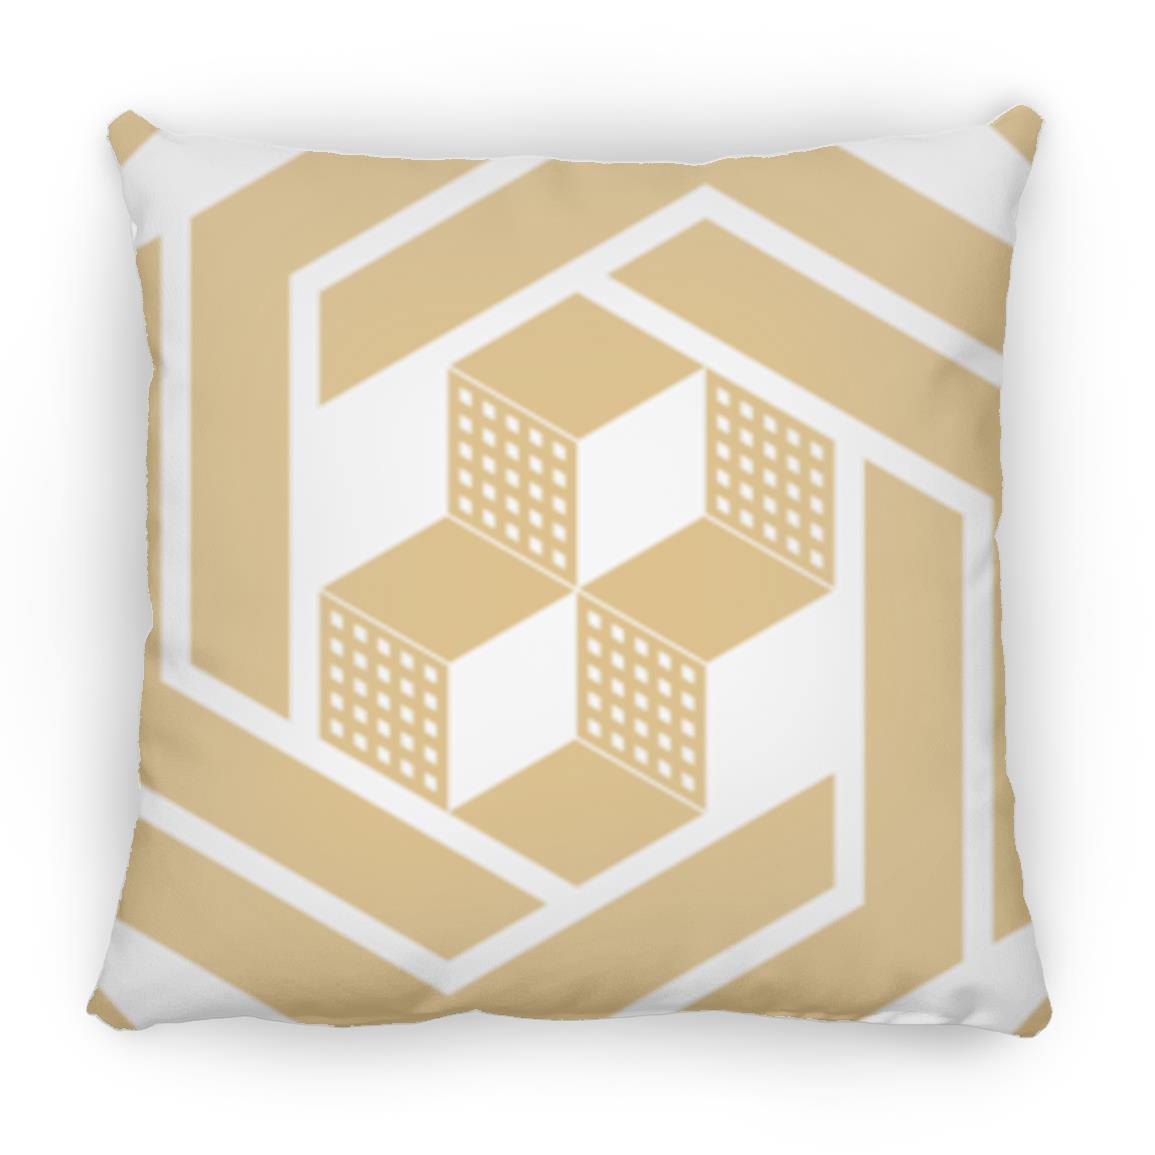 Crop Circle Pillow - Stanton St Bernard - Shapes of Wisdom